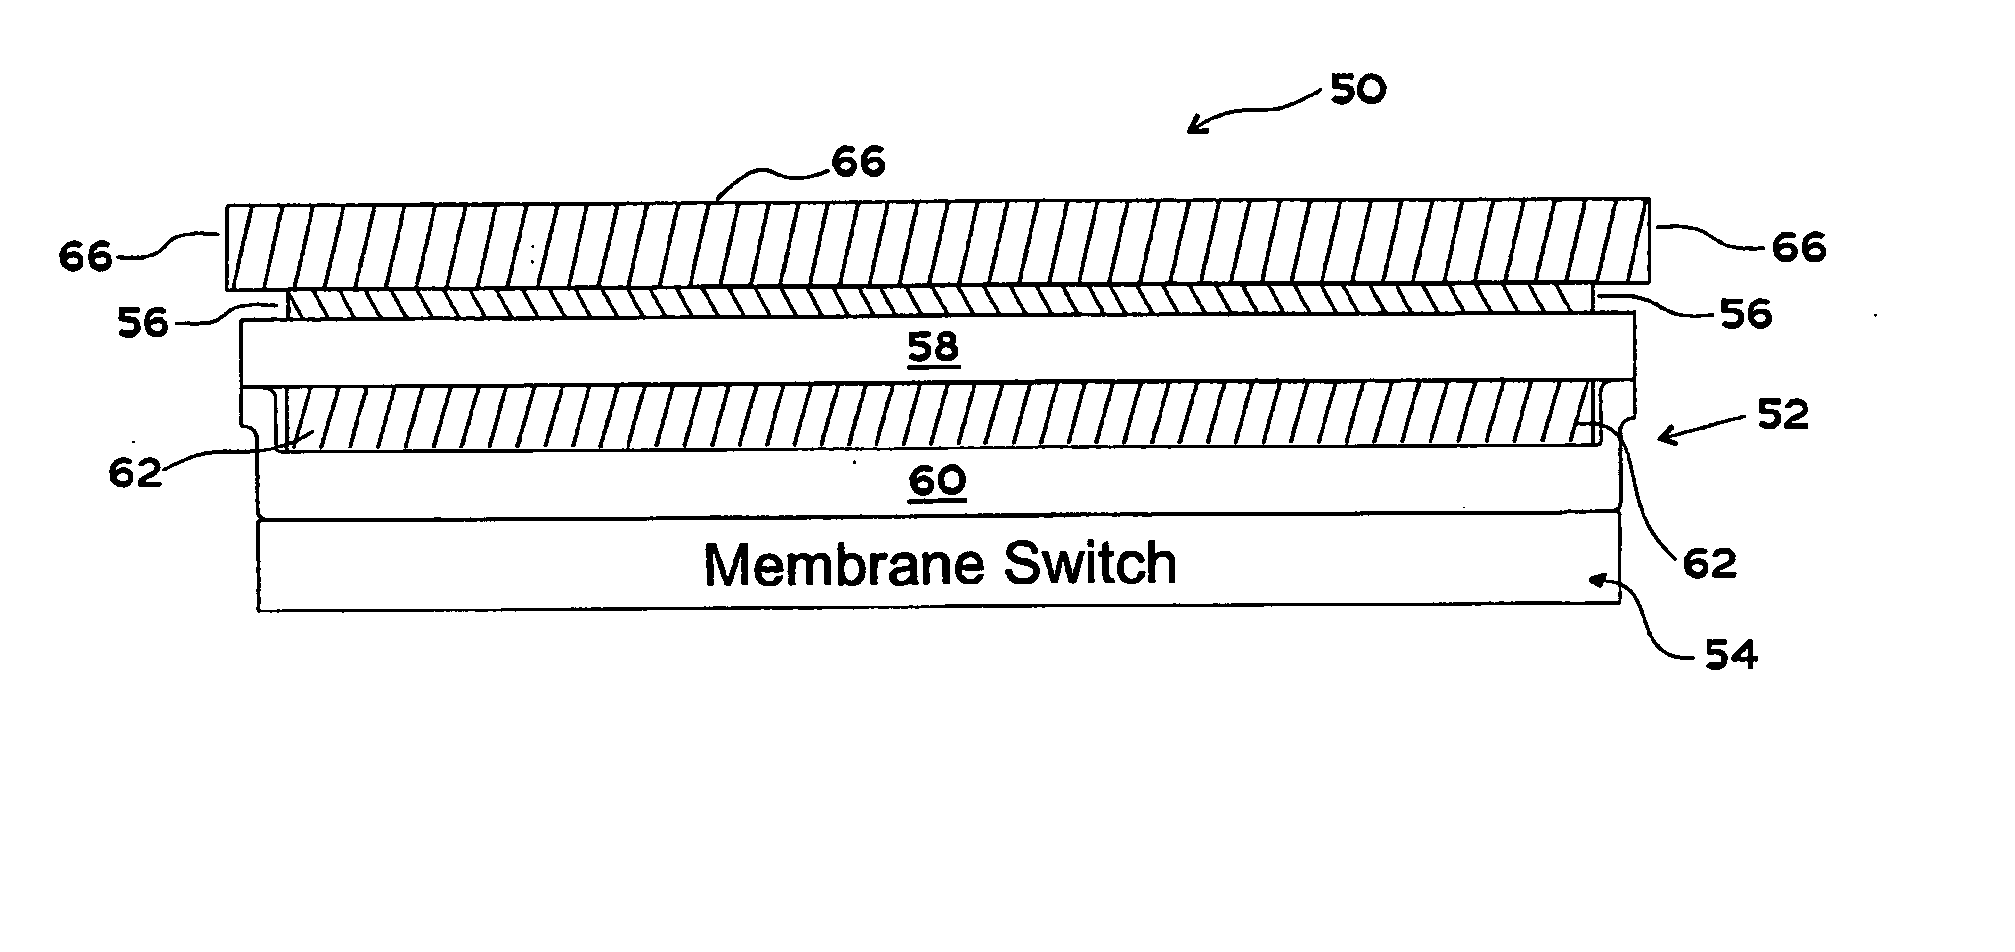 Electroluminescent lamp membrane switch